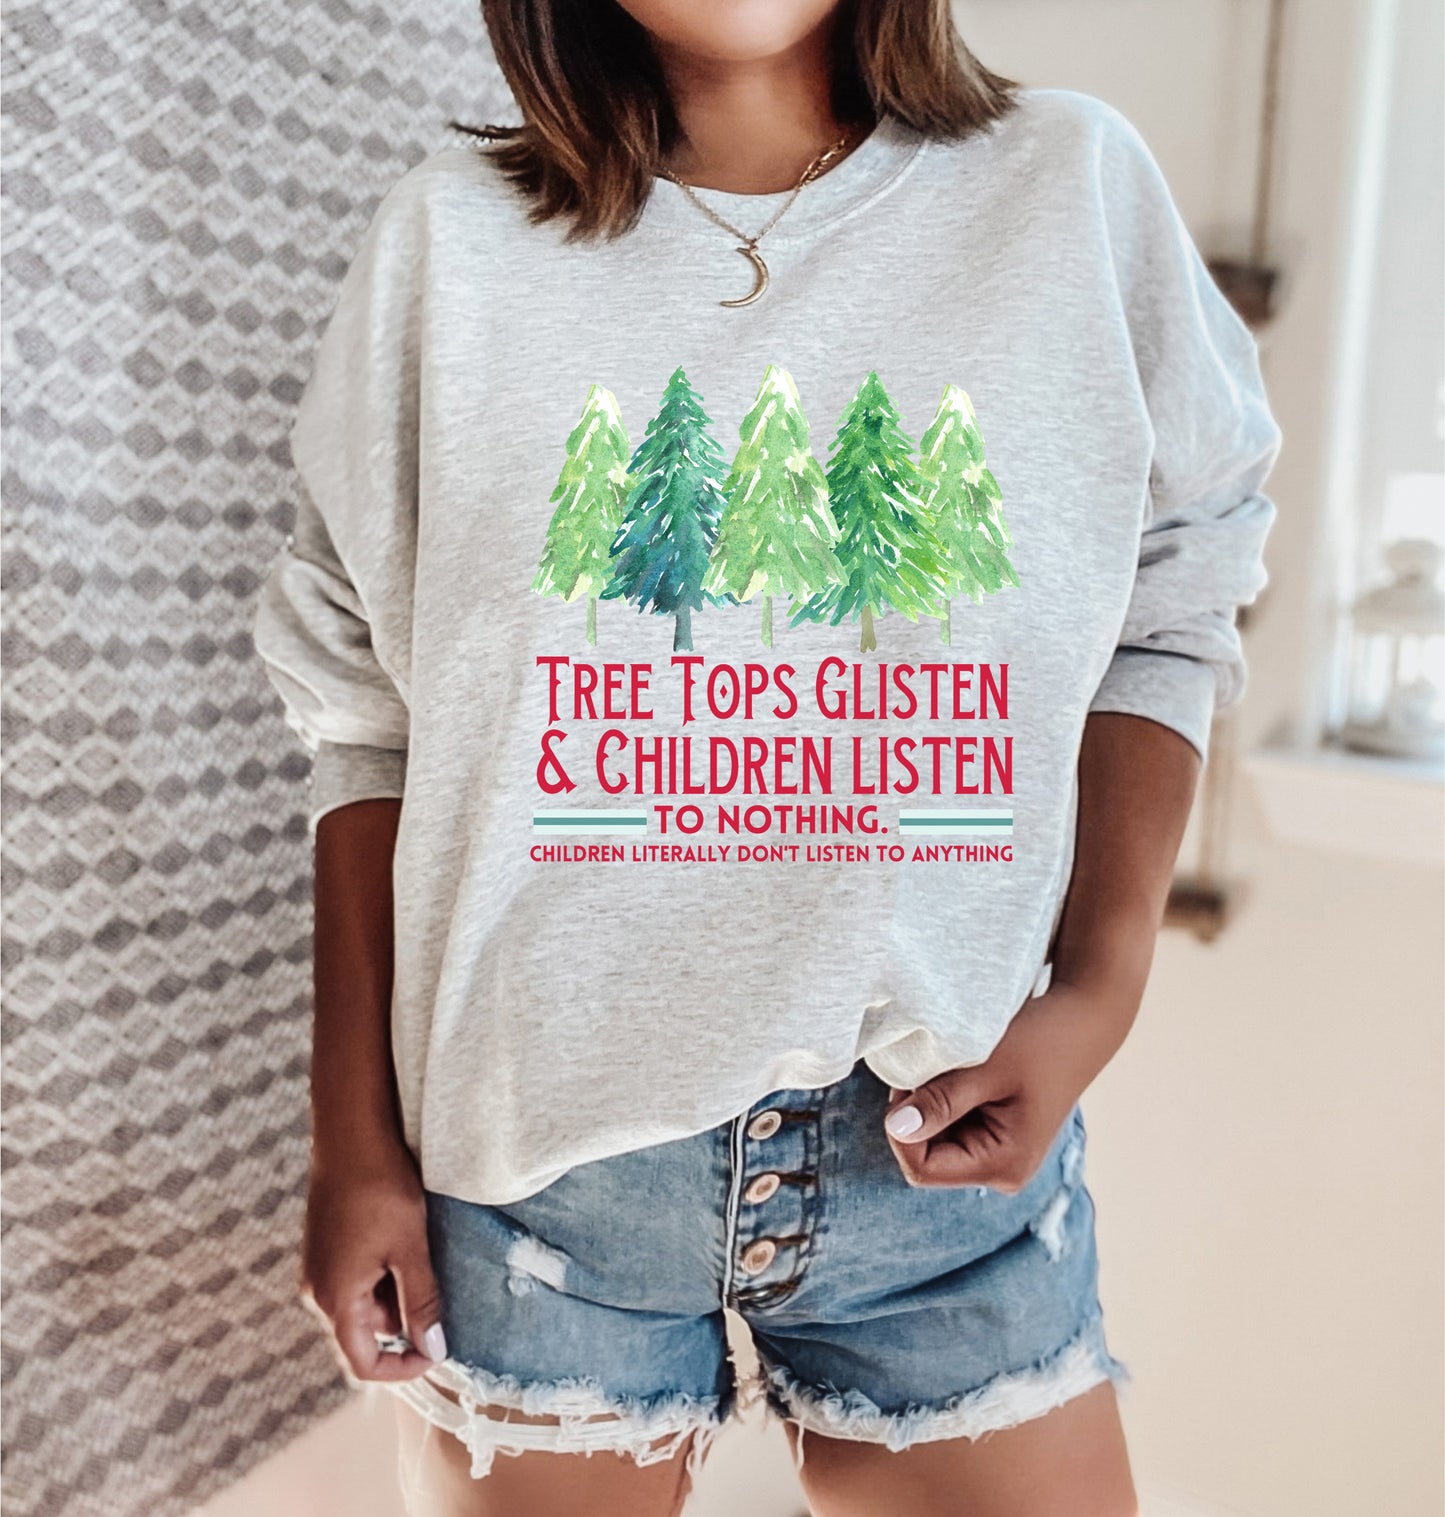 Tree Tops Glisten and Children Listen to Nothing Sweatshirt